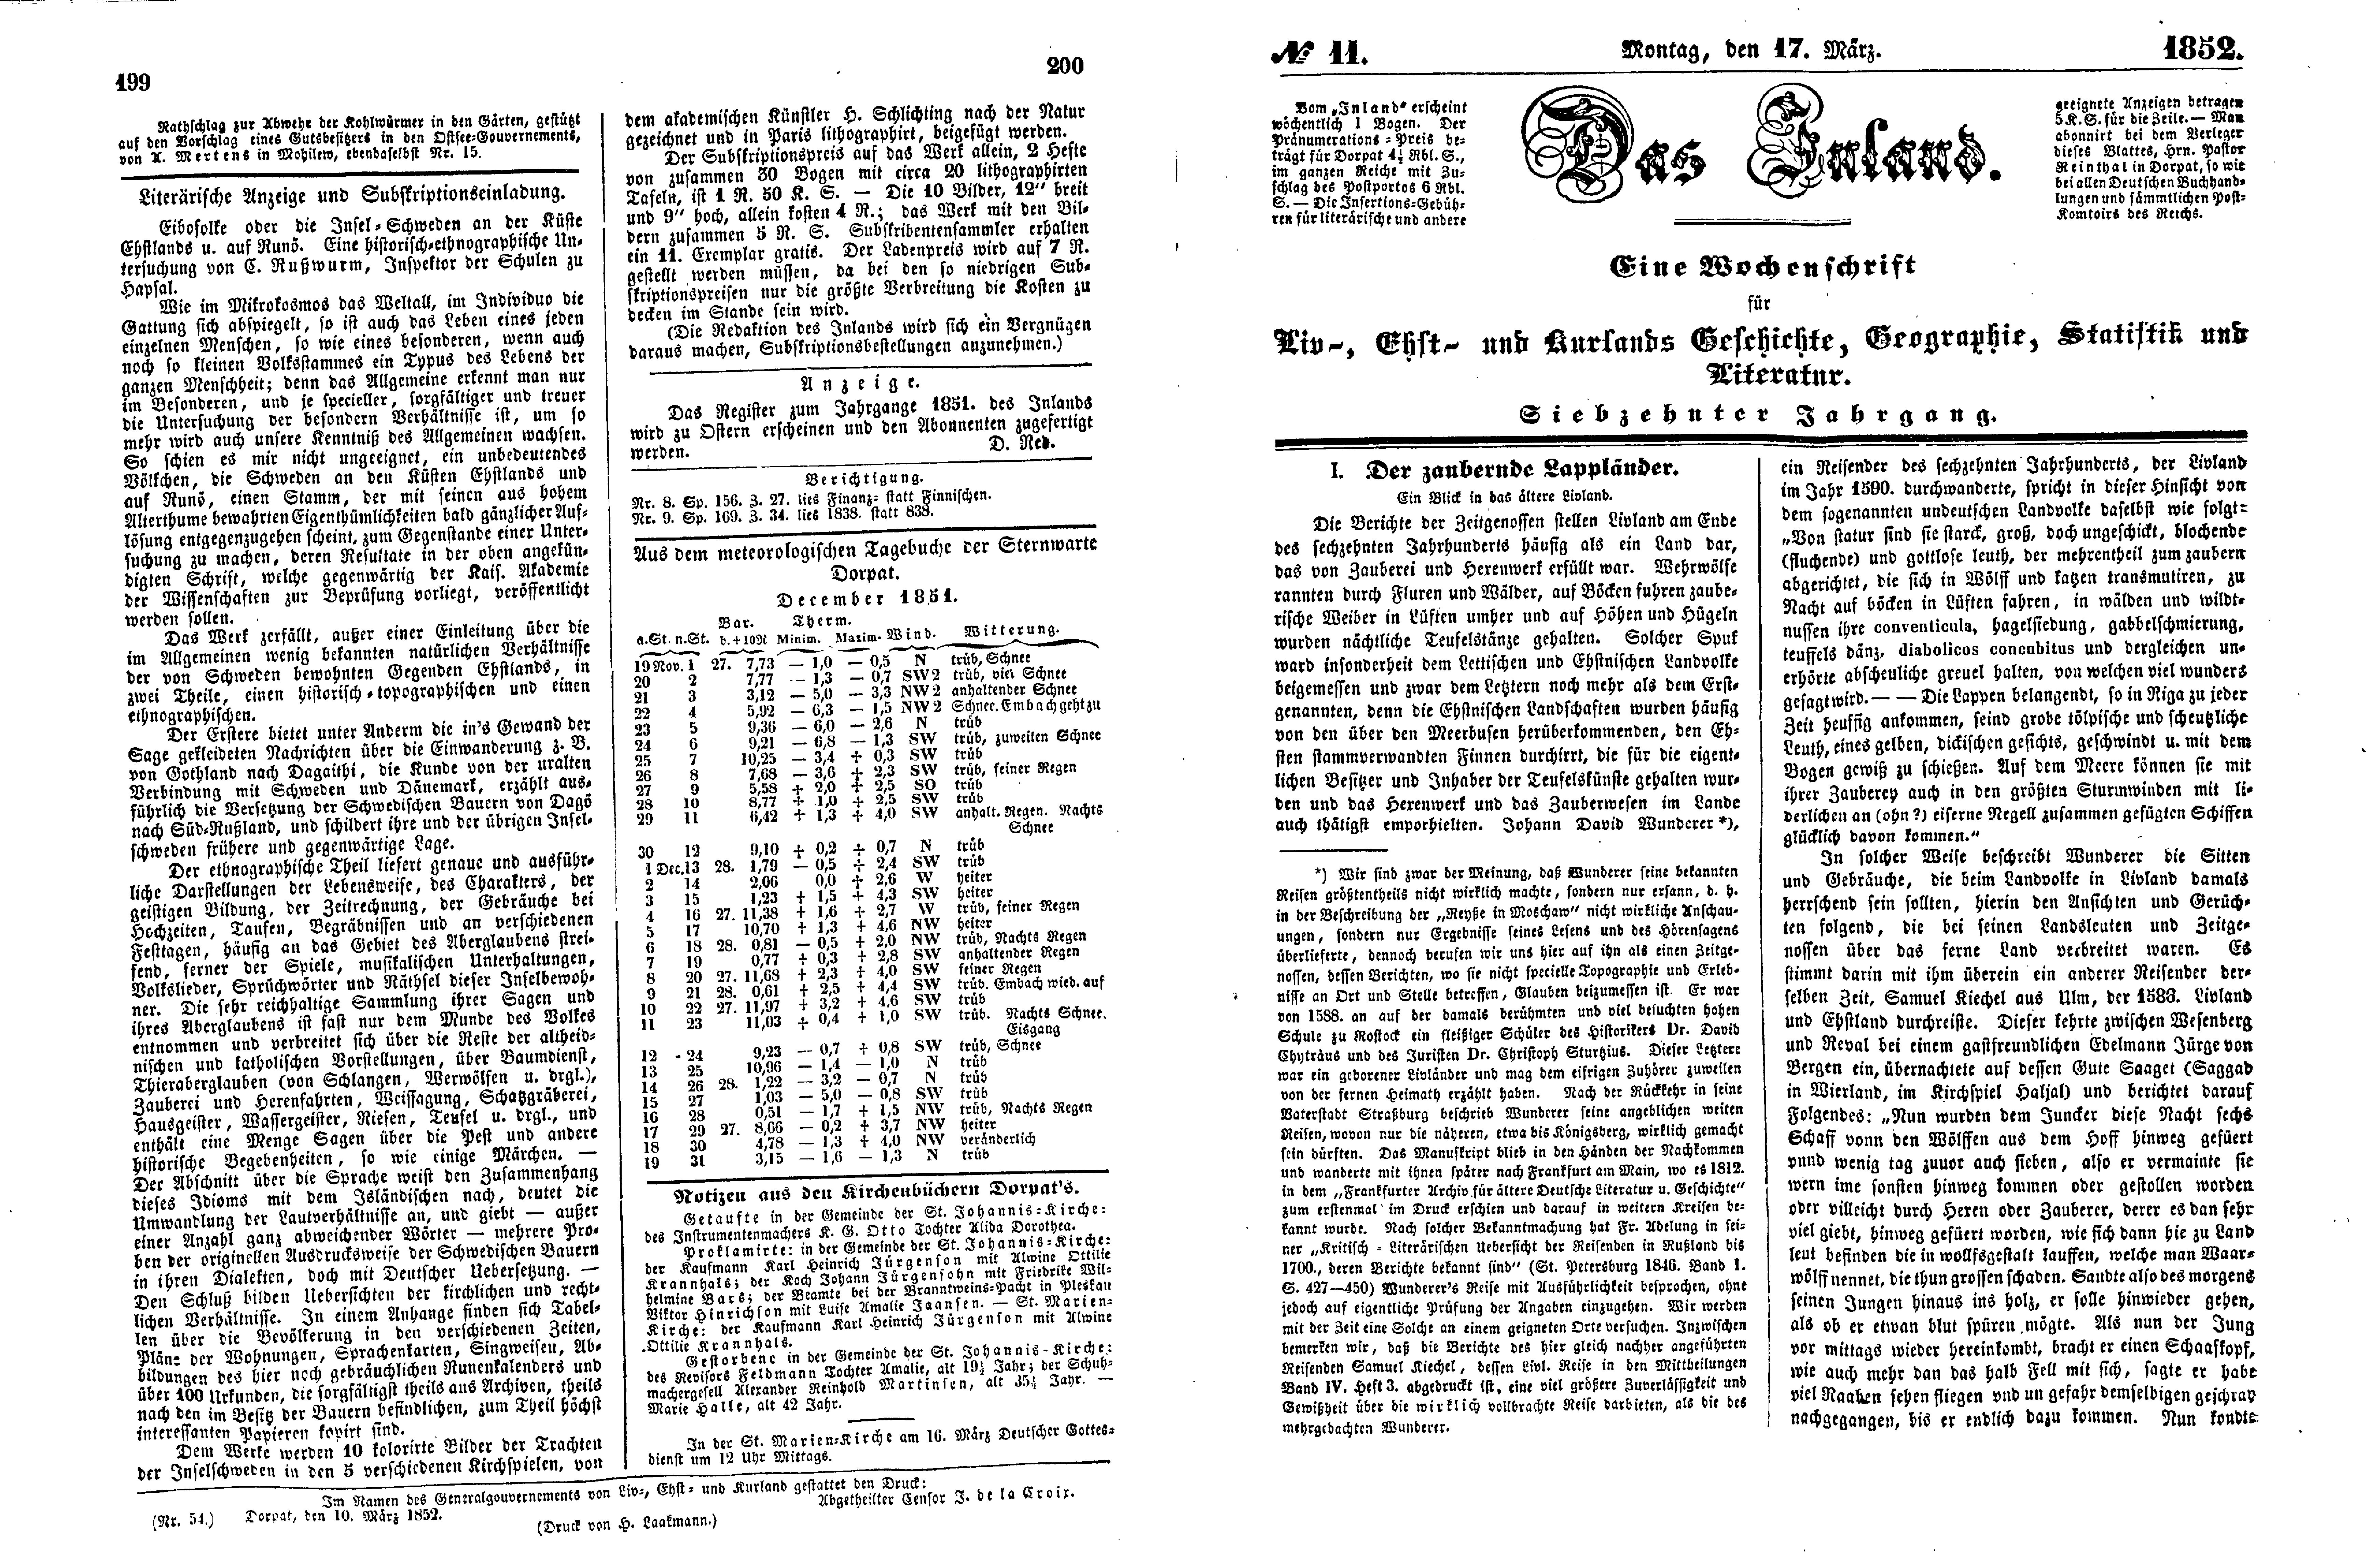 Das Inland [17] (1852) | 54. (199-202) Main body of text